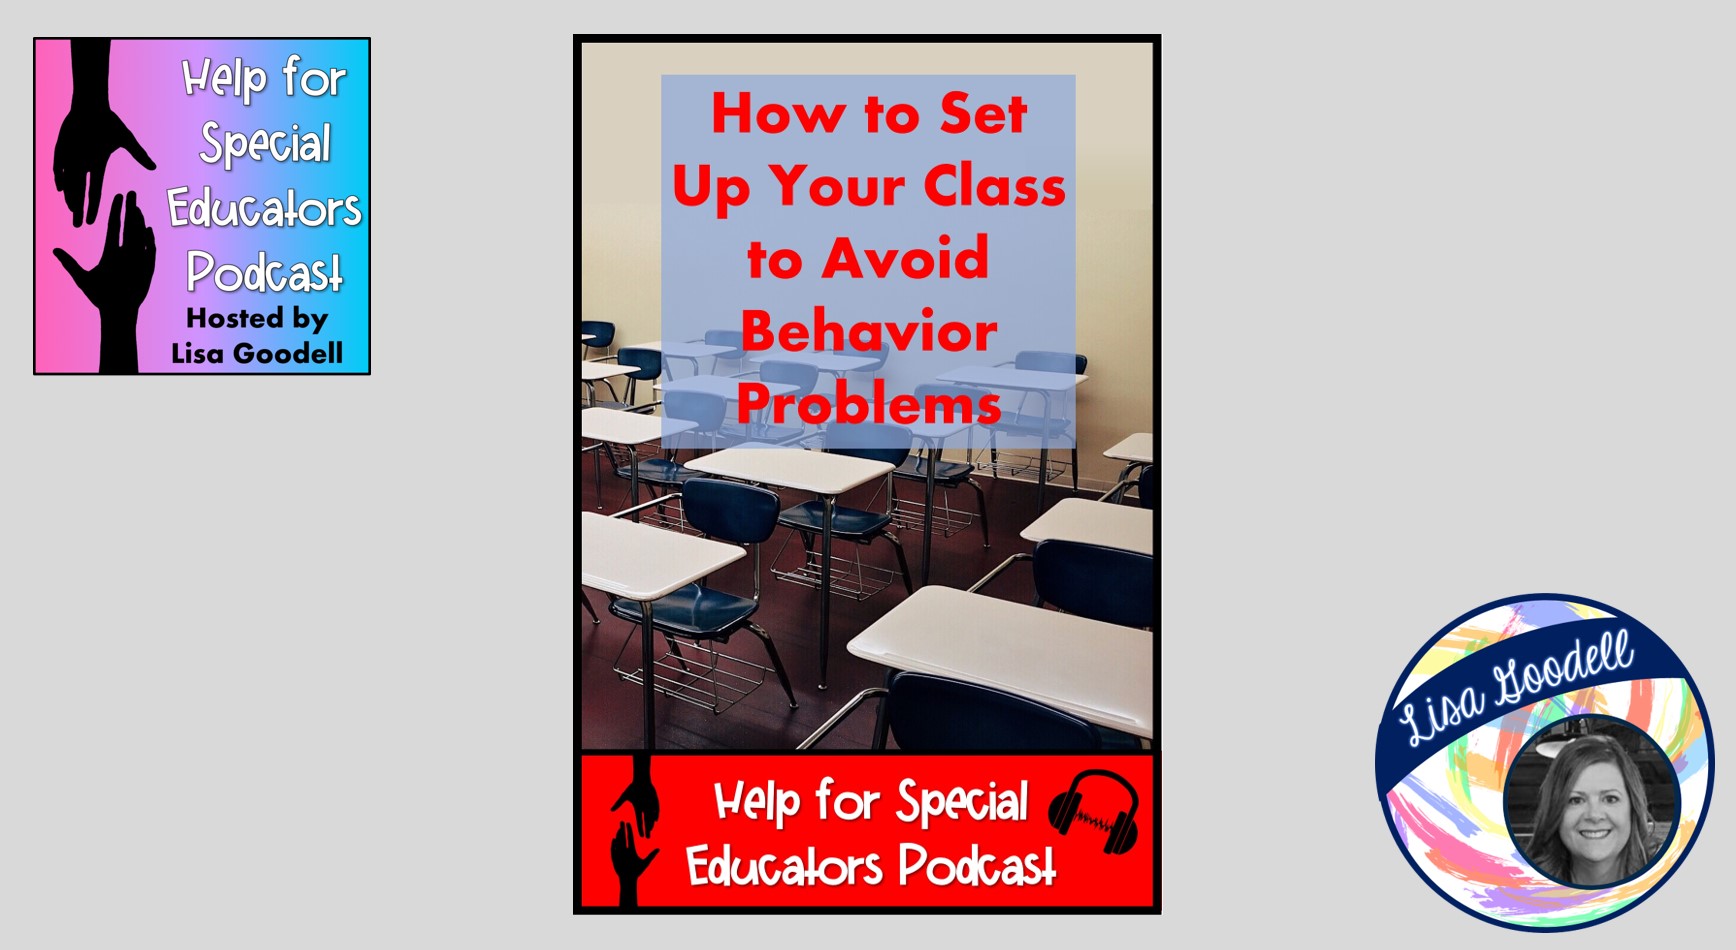 Class Set Up Ideas to Avoid Problem Behaviors